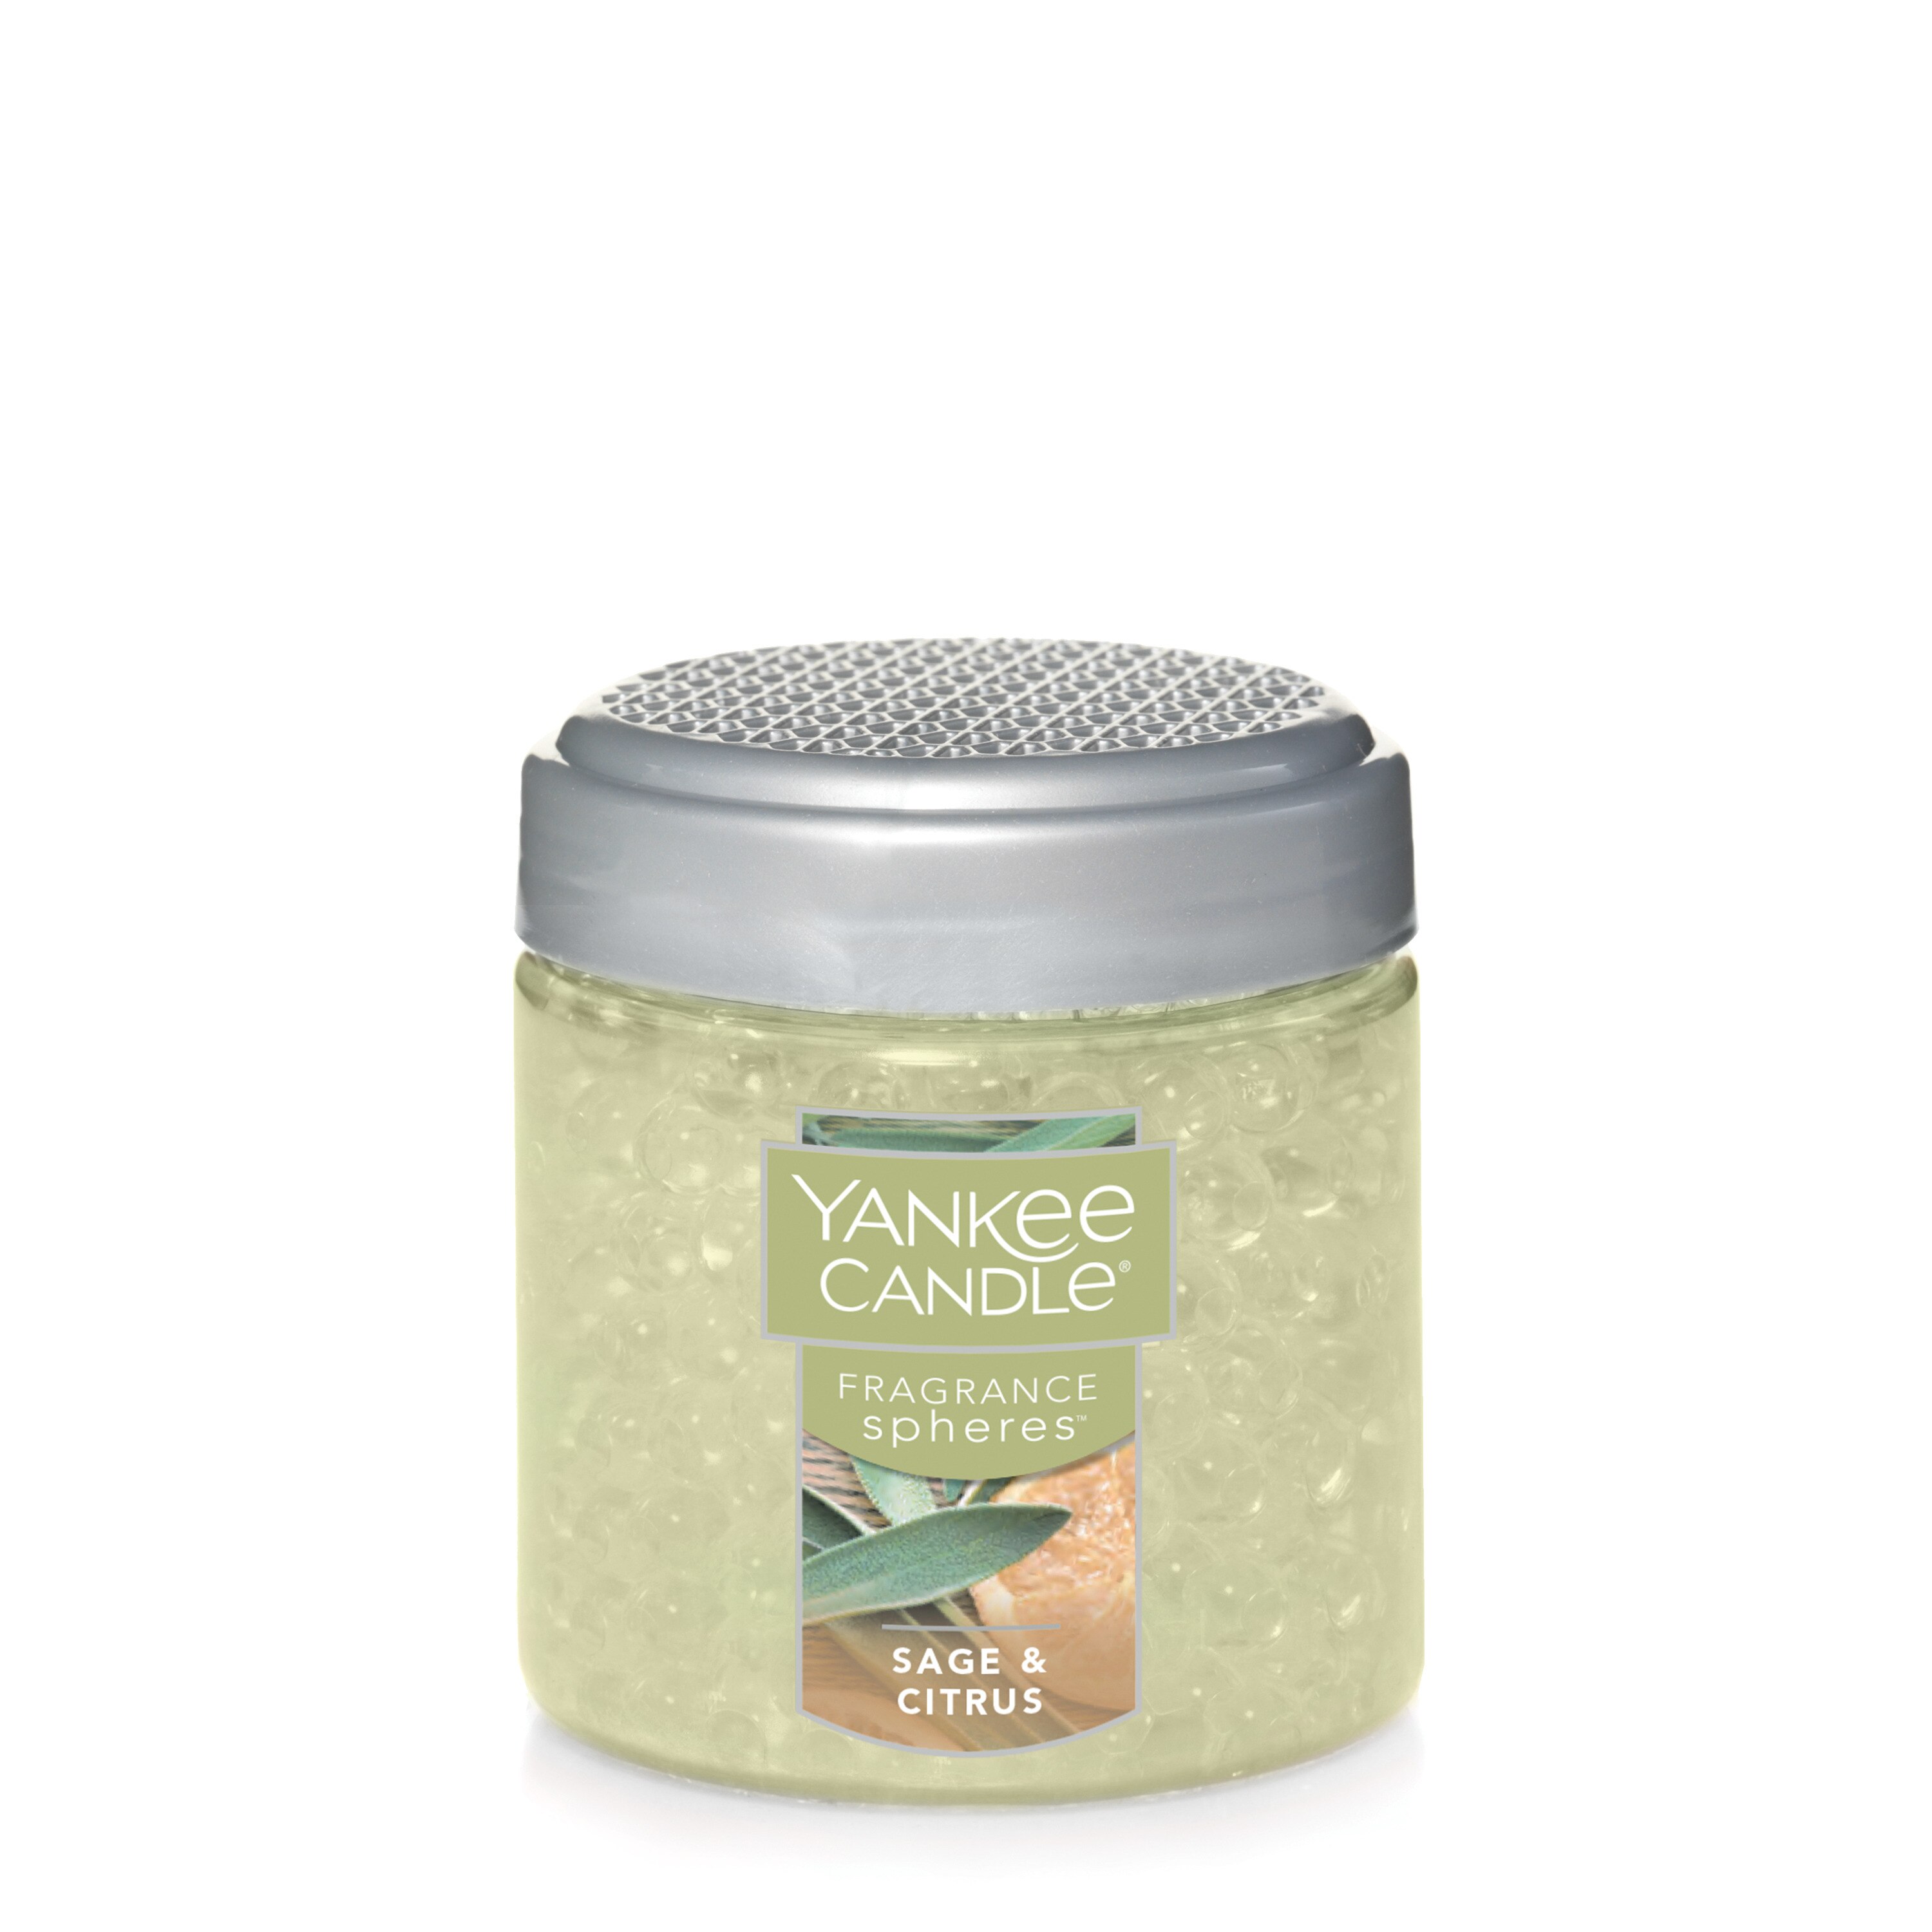 Yankee Candle Sage Citrus Fragrance Spheres - 6 Oz , CVS